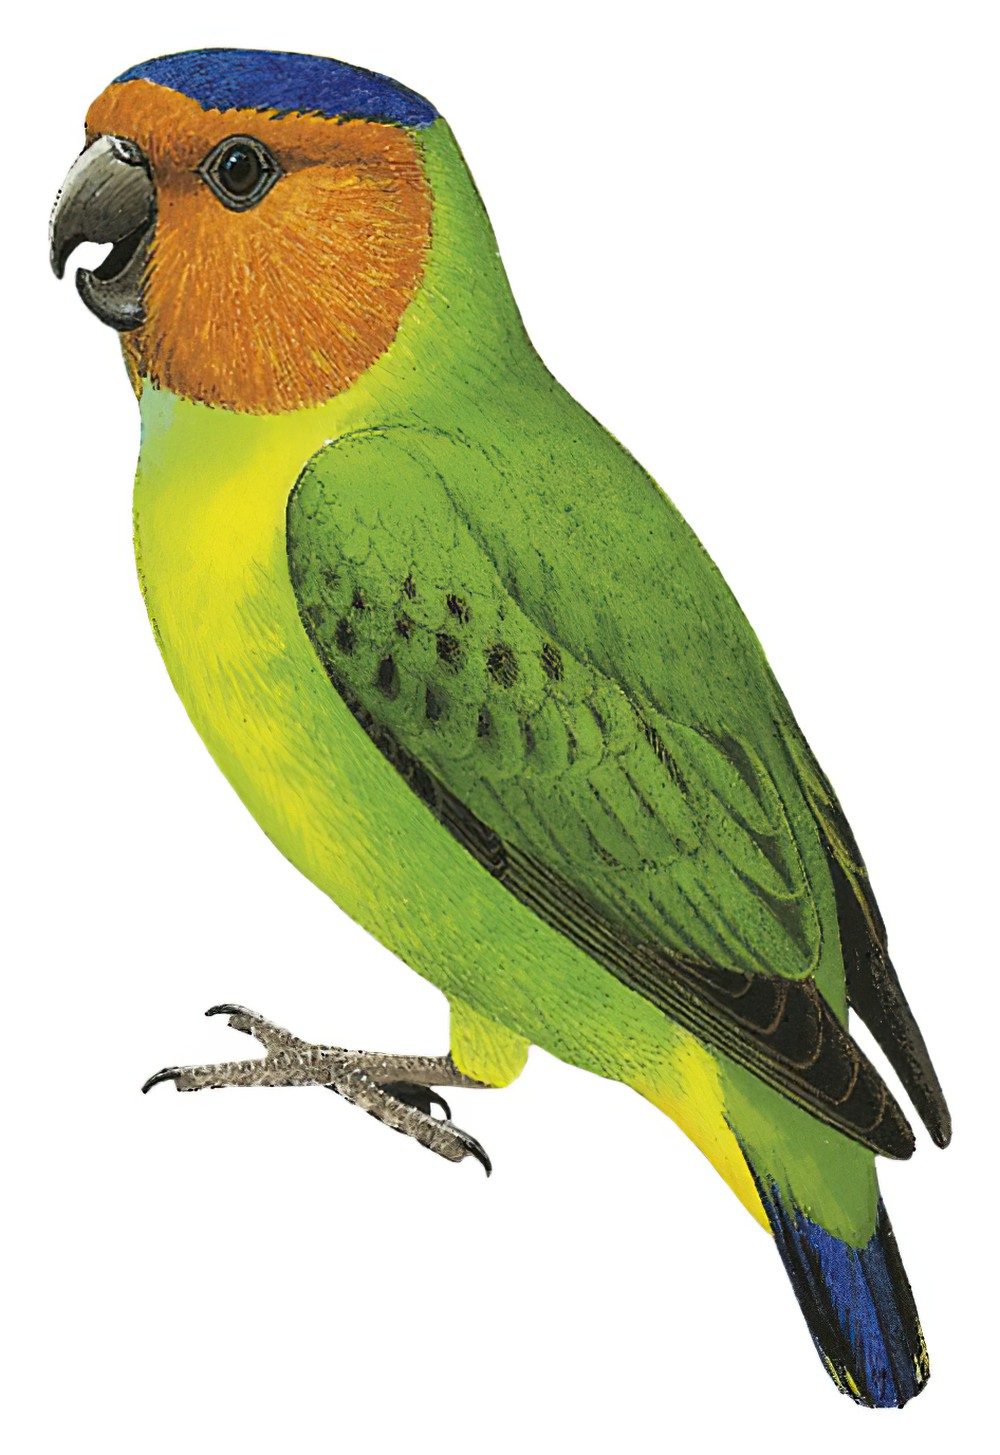 Buff-faced Pygmy-Parrot / Micropsitta pusio